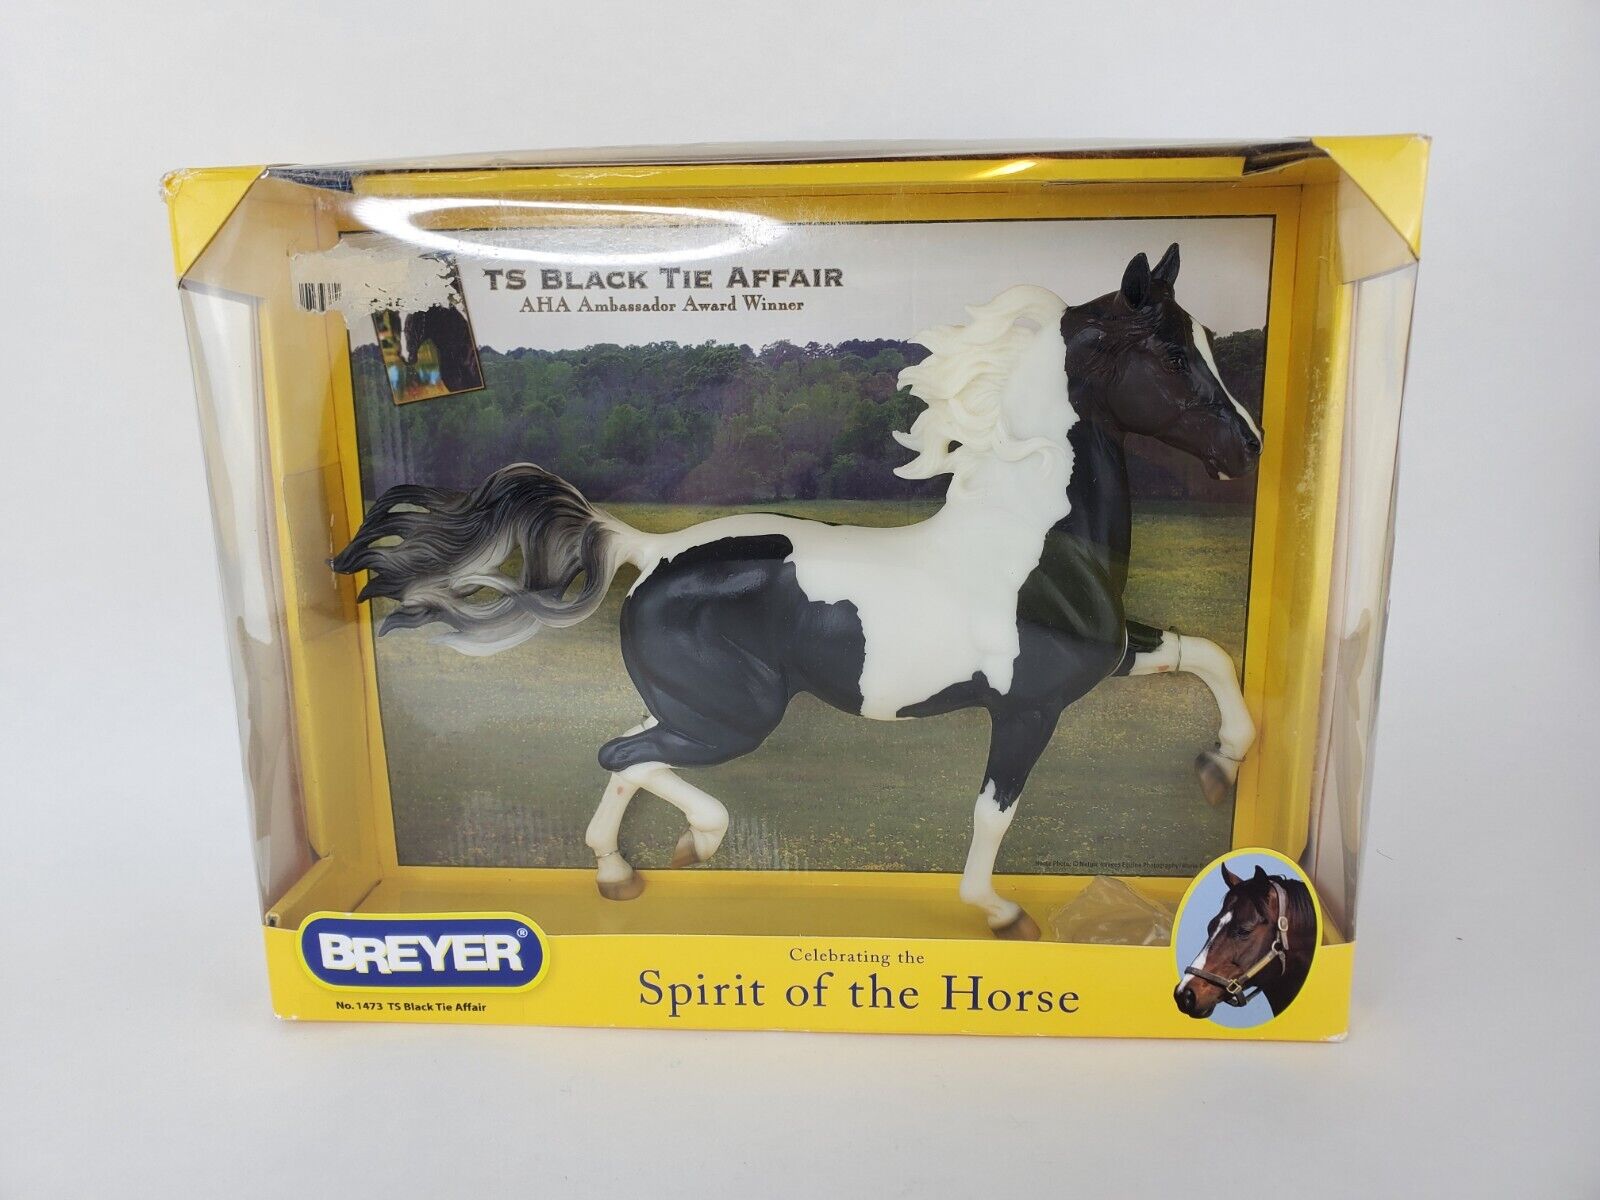 Breyer Horse TS Black Tie Affair 2010 New No. 1473 Spirit of the horse 